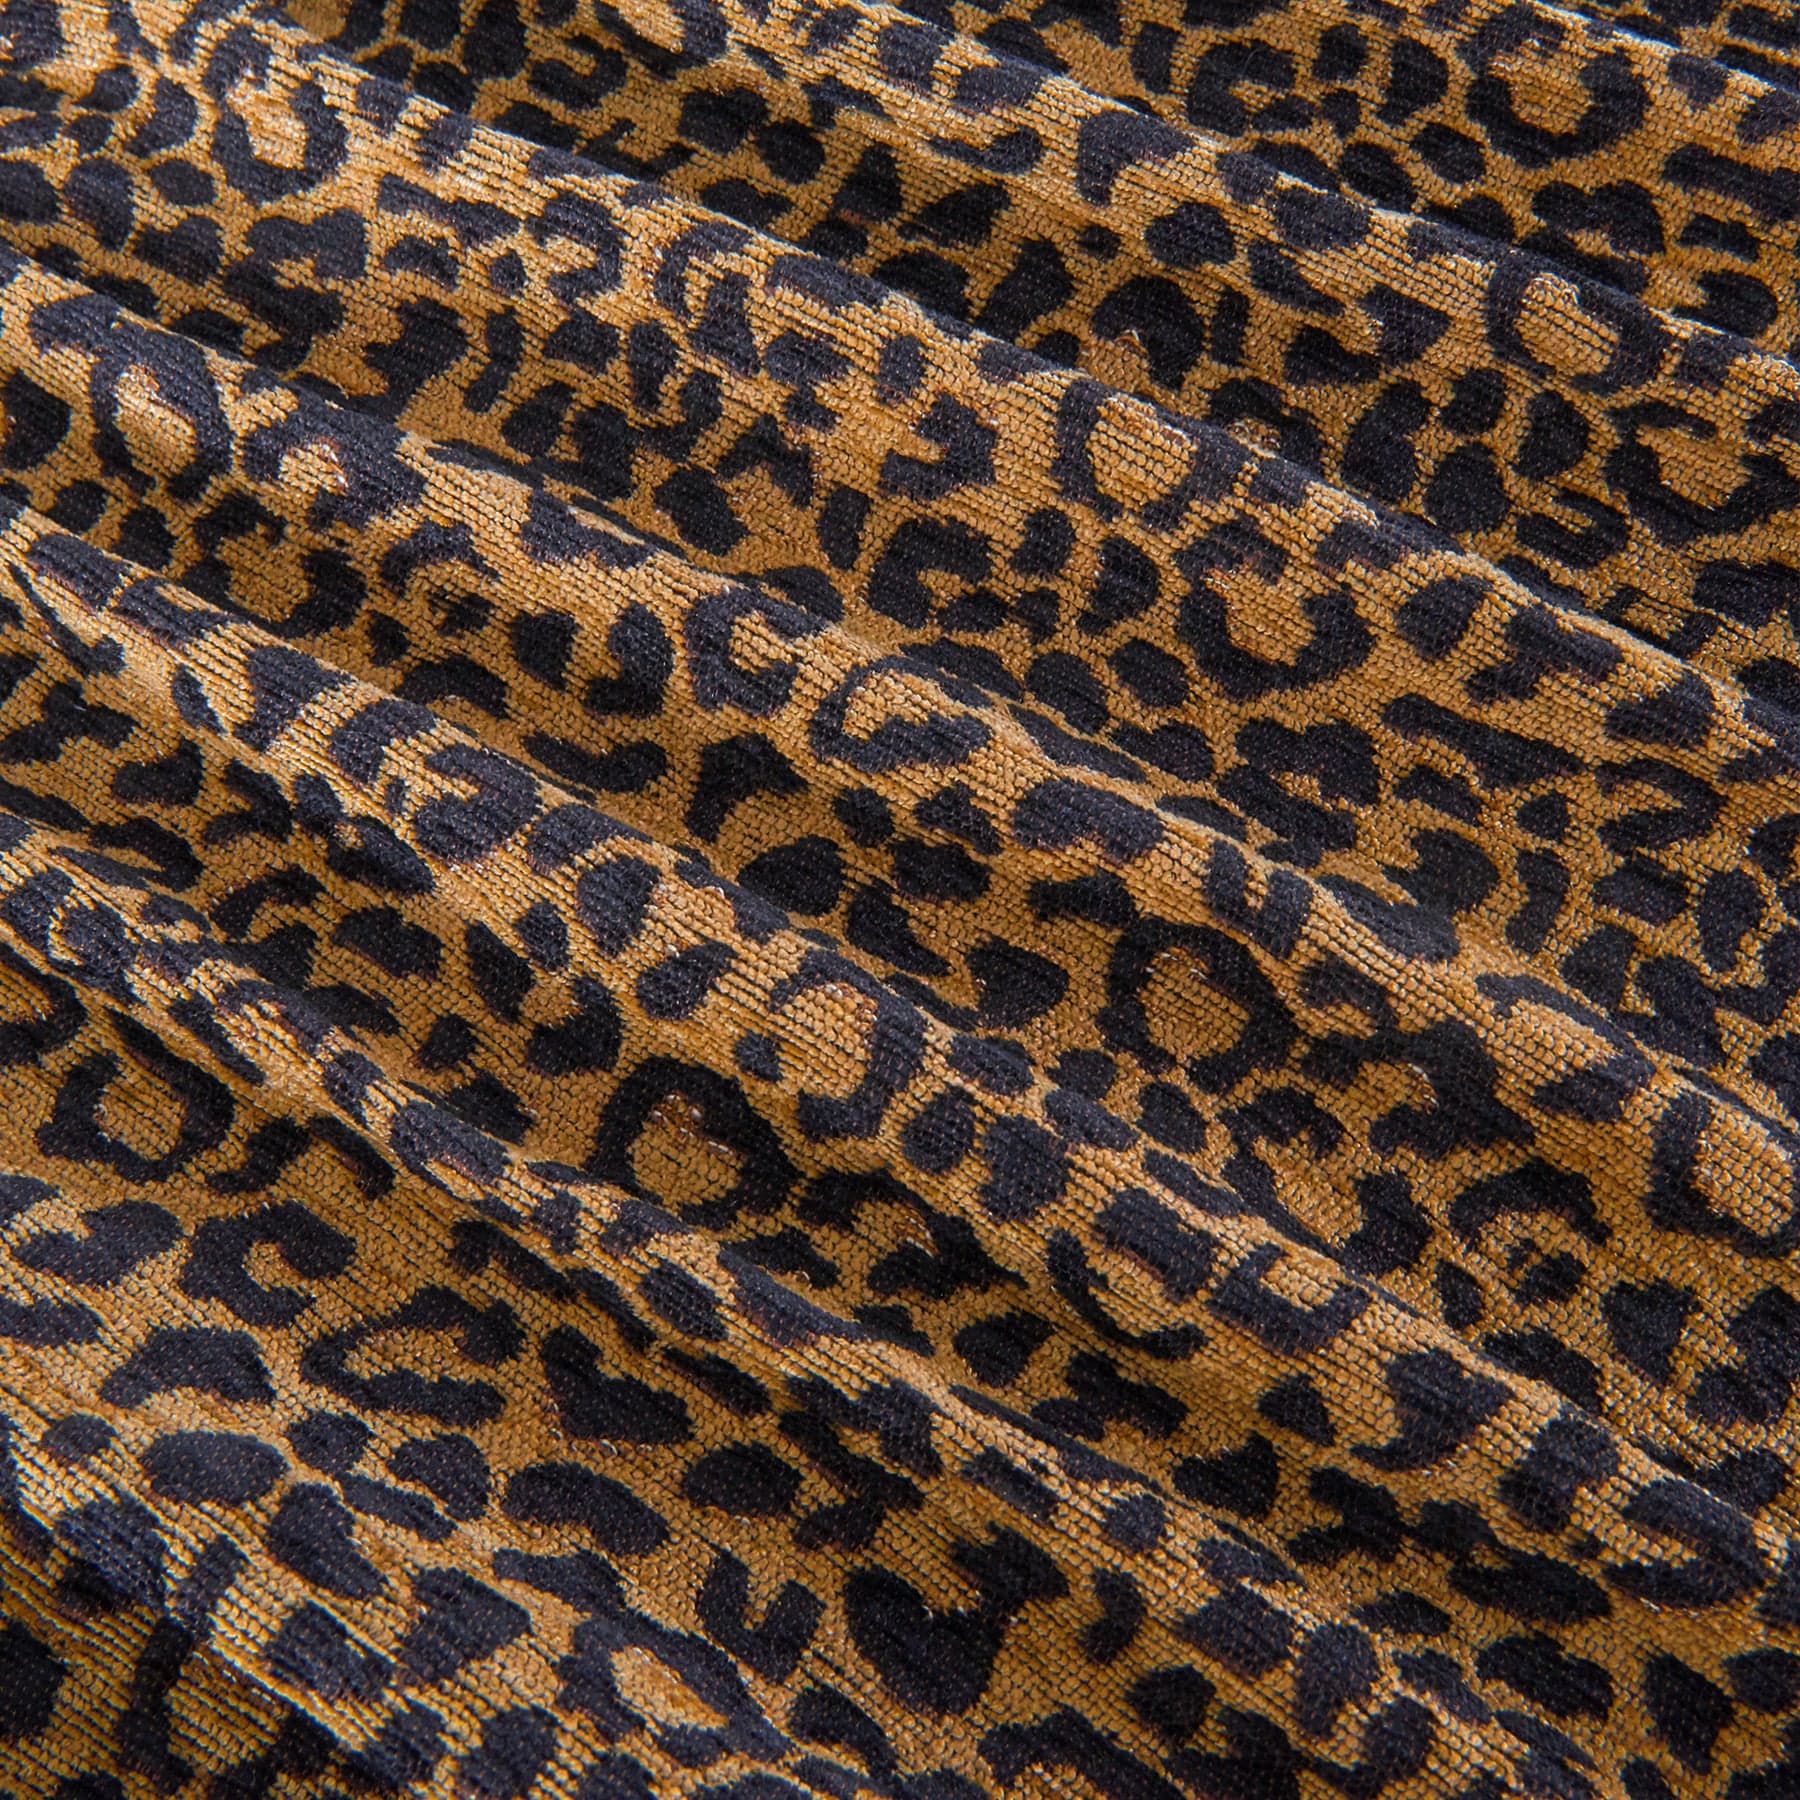 San Angelo Comforter Set, Teal & Leopard Sale-Comforter